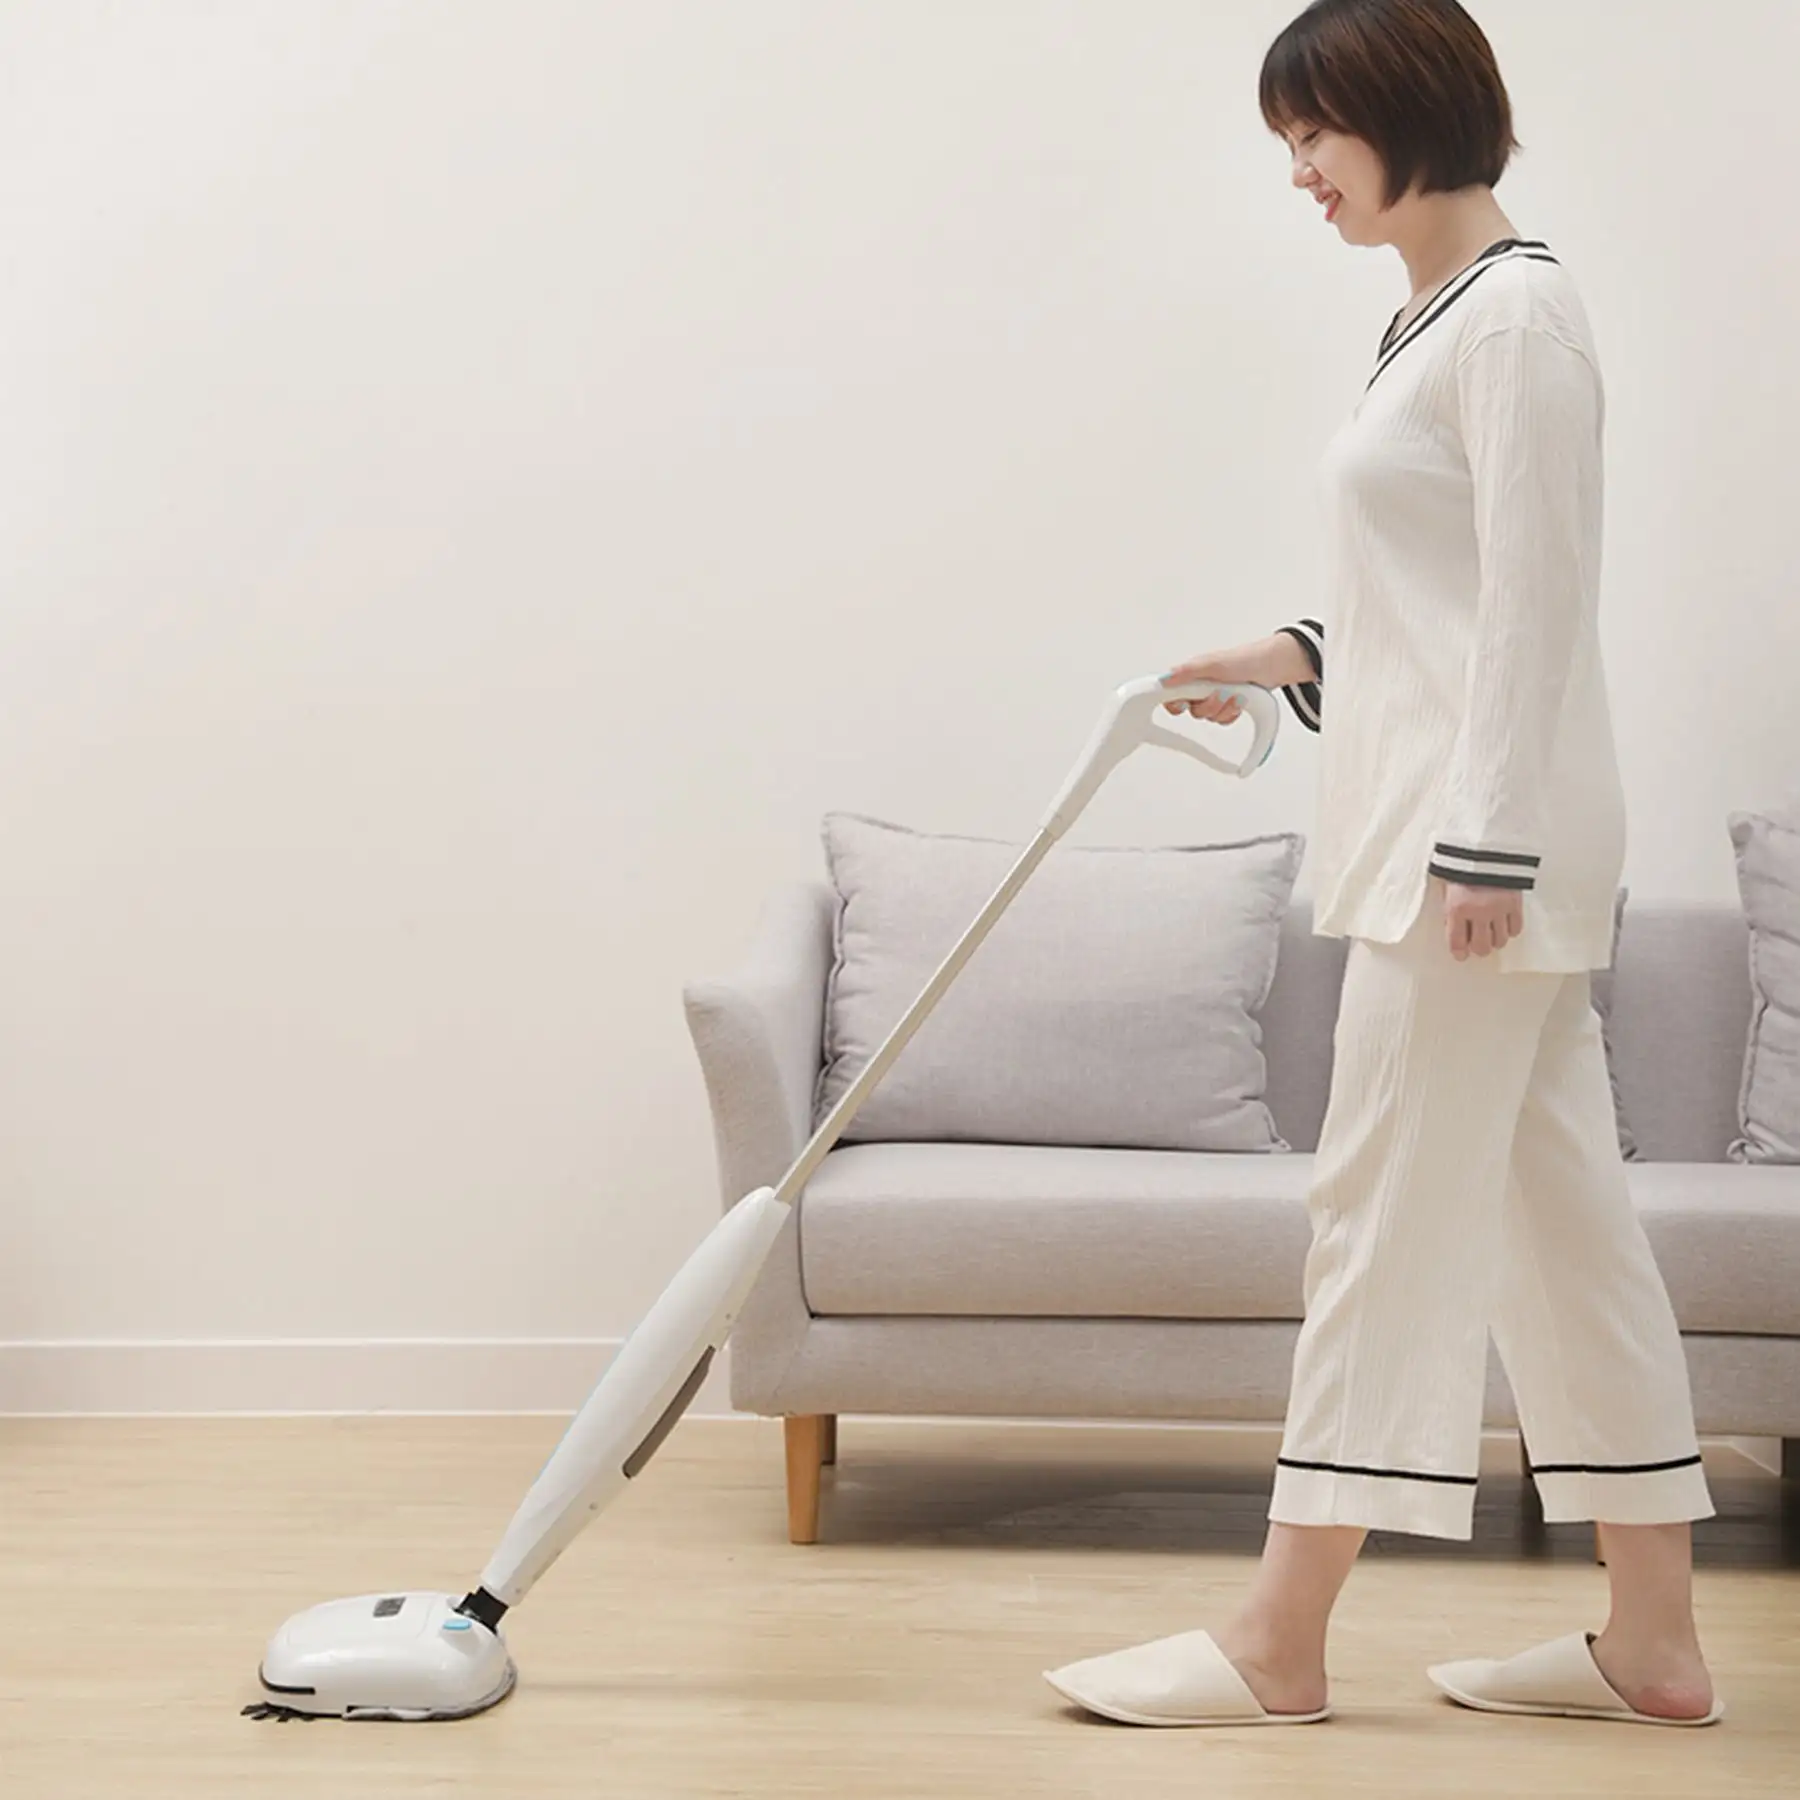 Household Cleaning Mop balai 3 en 1 Rechargeable Handheld Spin Maid Floor Cleaner